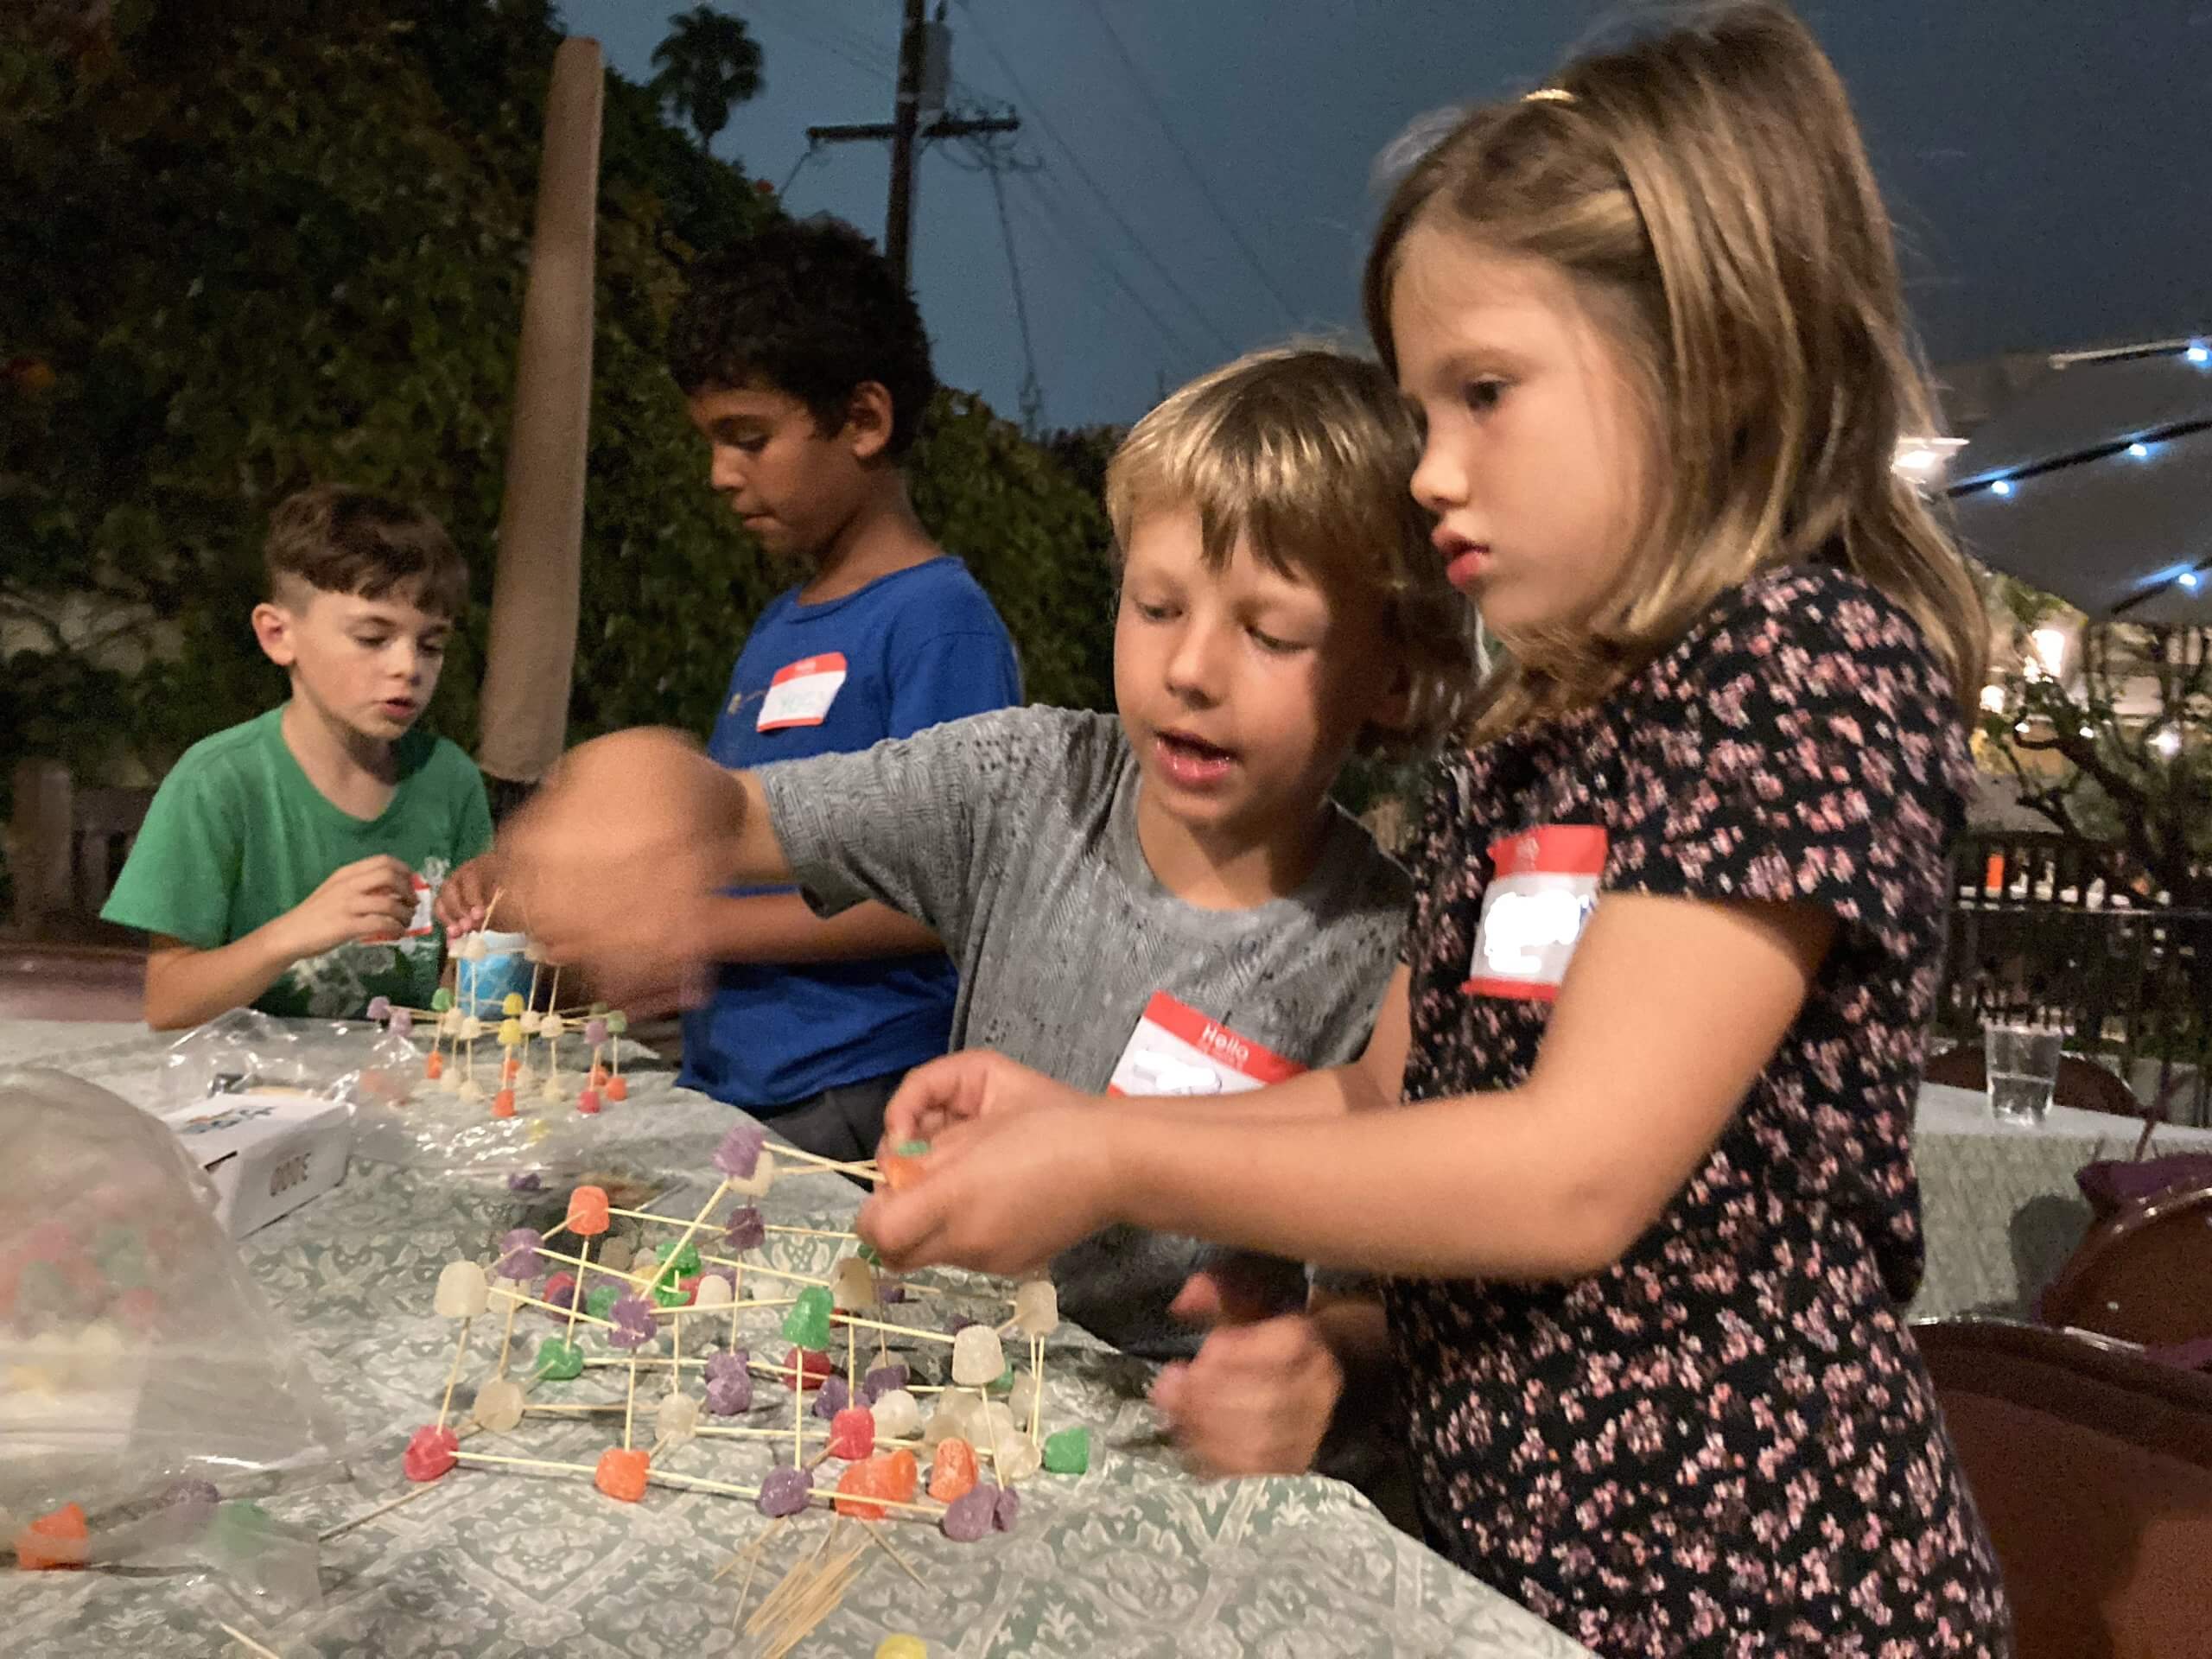 Kids build gumdrop sculptures at First Friday Fun night